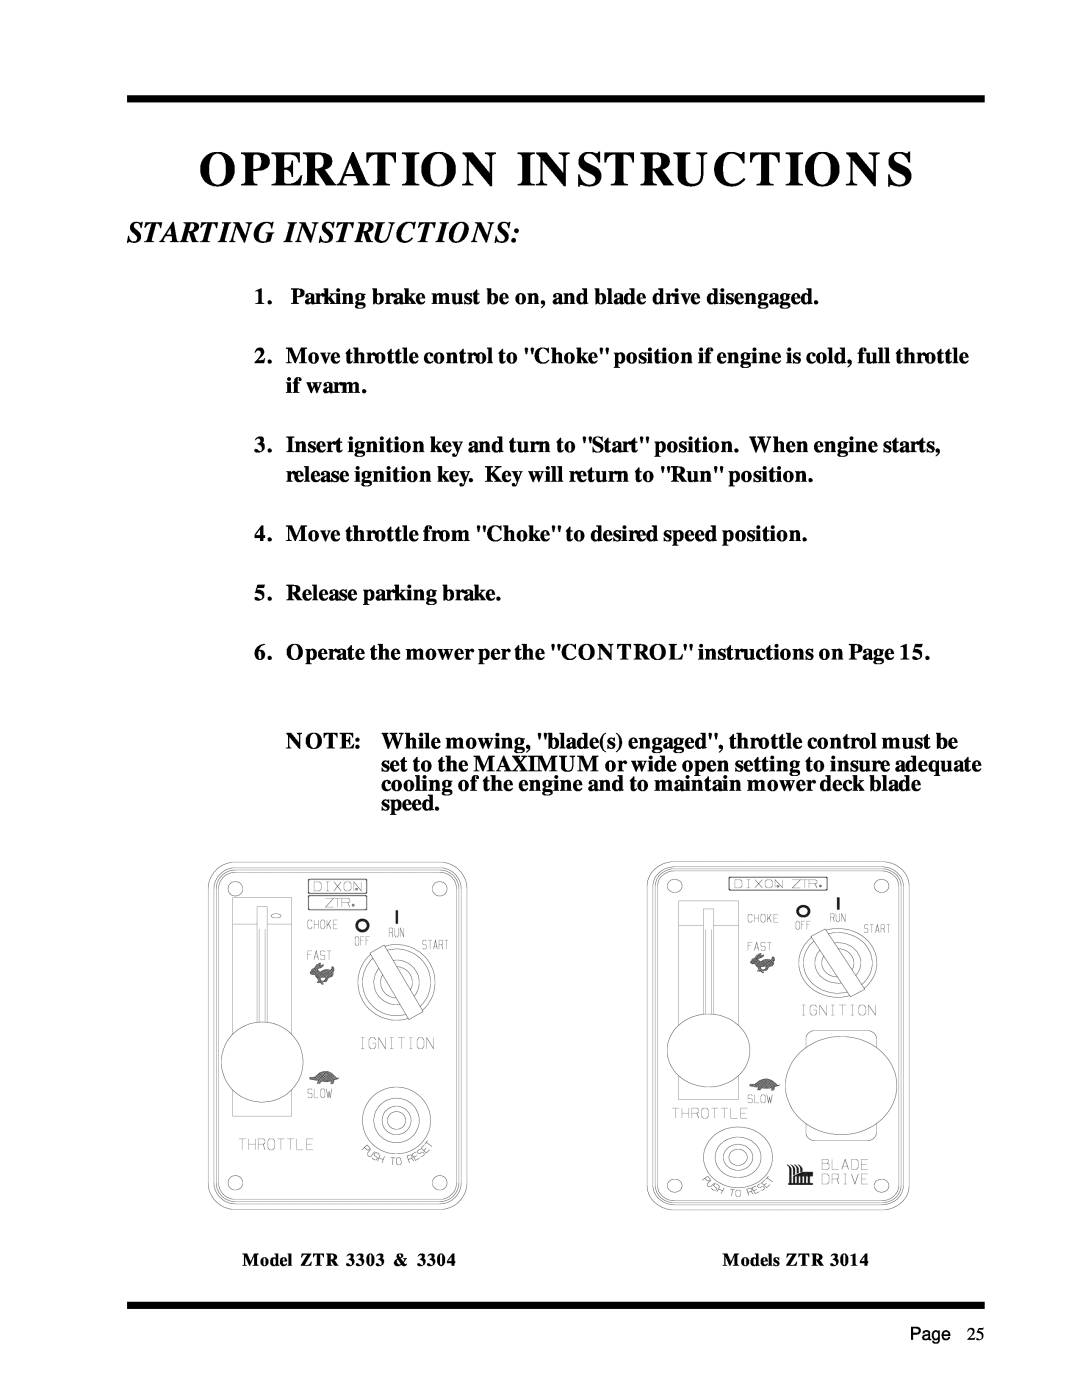 Dixon ZTR 2301 manual Starting Instructions, Operation Instructions 